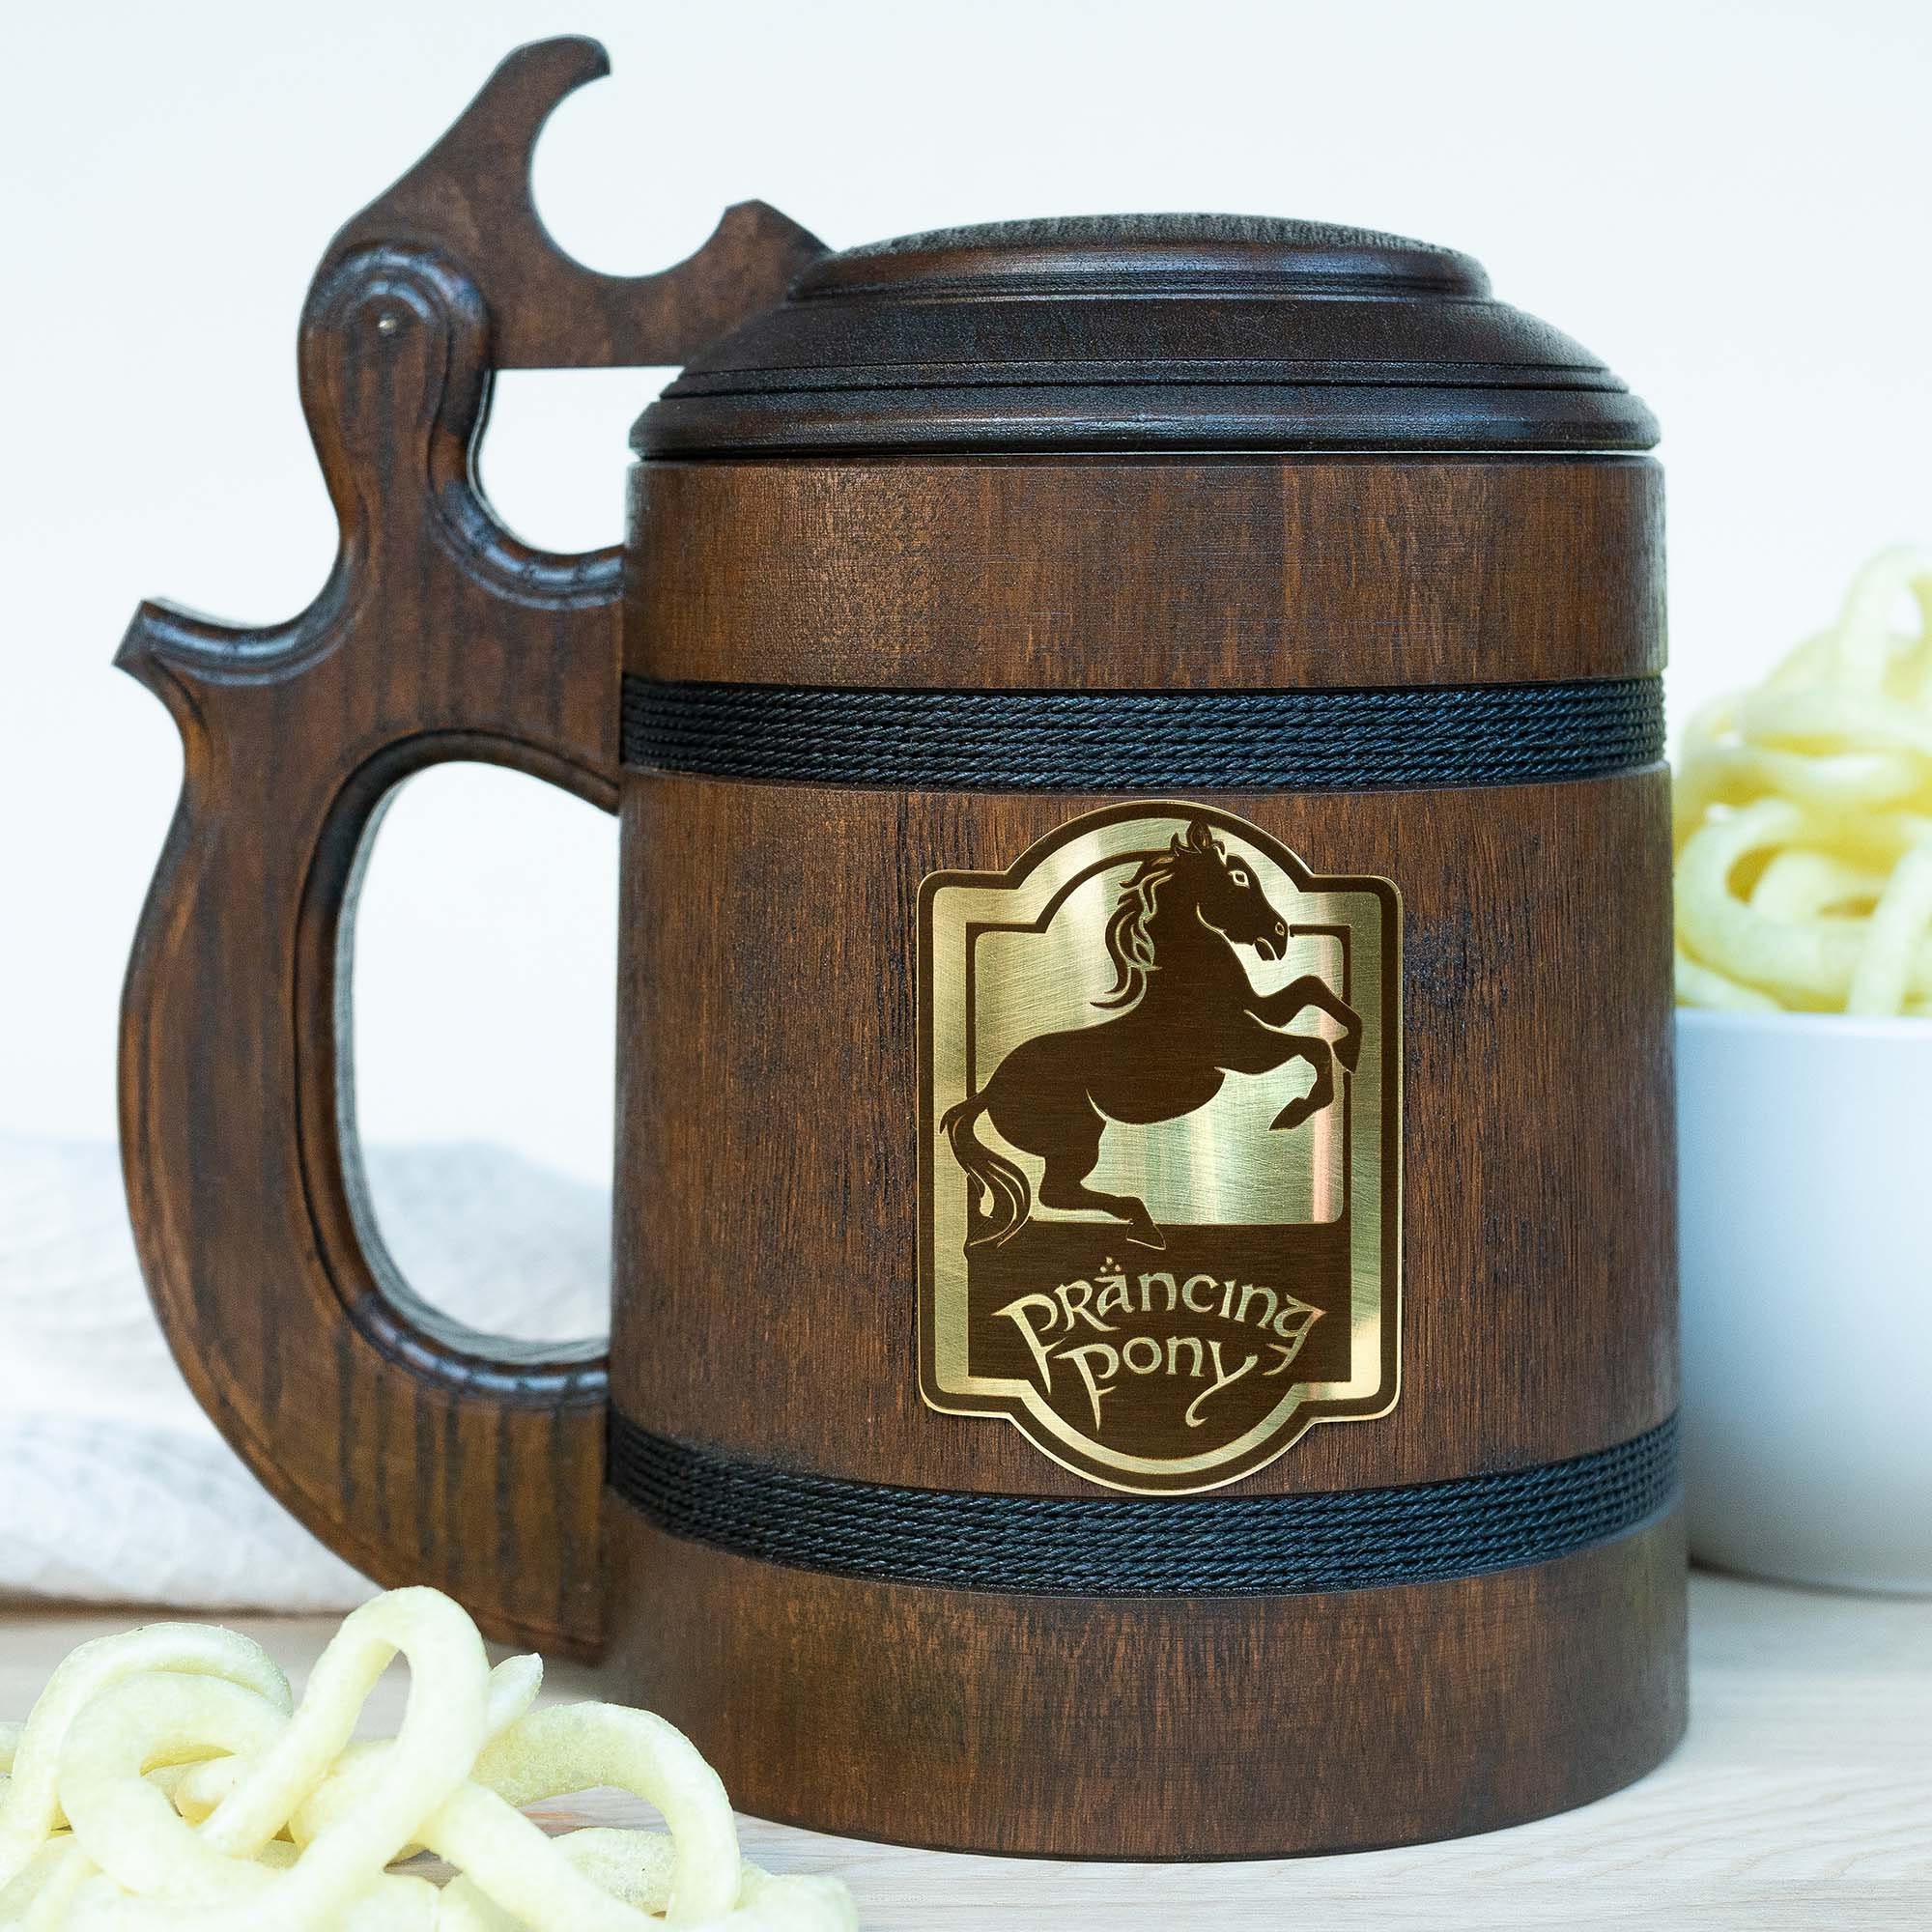 Prancing Pony Mug, Lord of the Rings Mug, Wooden Beer Mug, Tankard, Wooden  Tankard, Wood Tankard, Beer Mug, Wood Mug, Groomsmen Gift, 20oz 